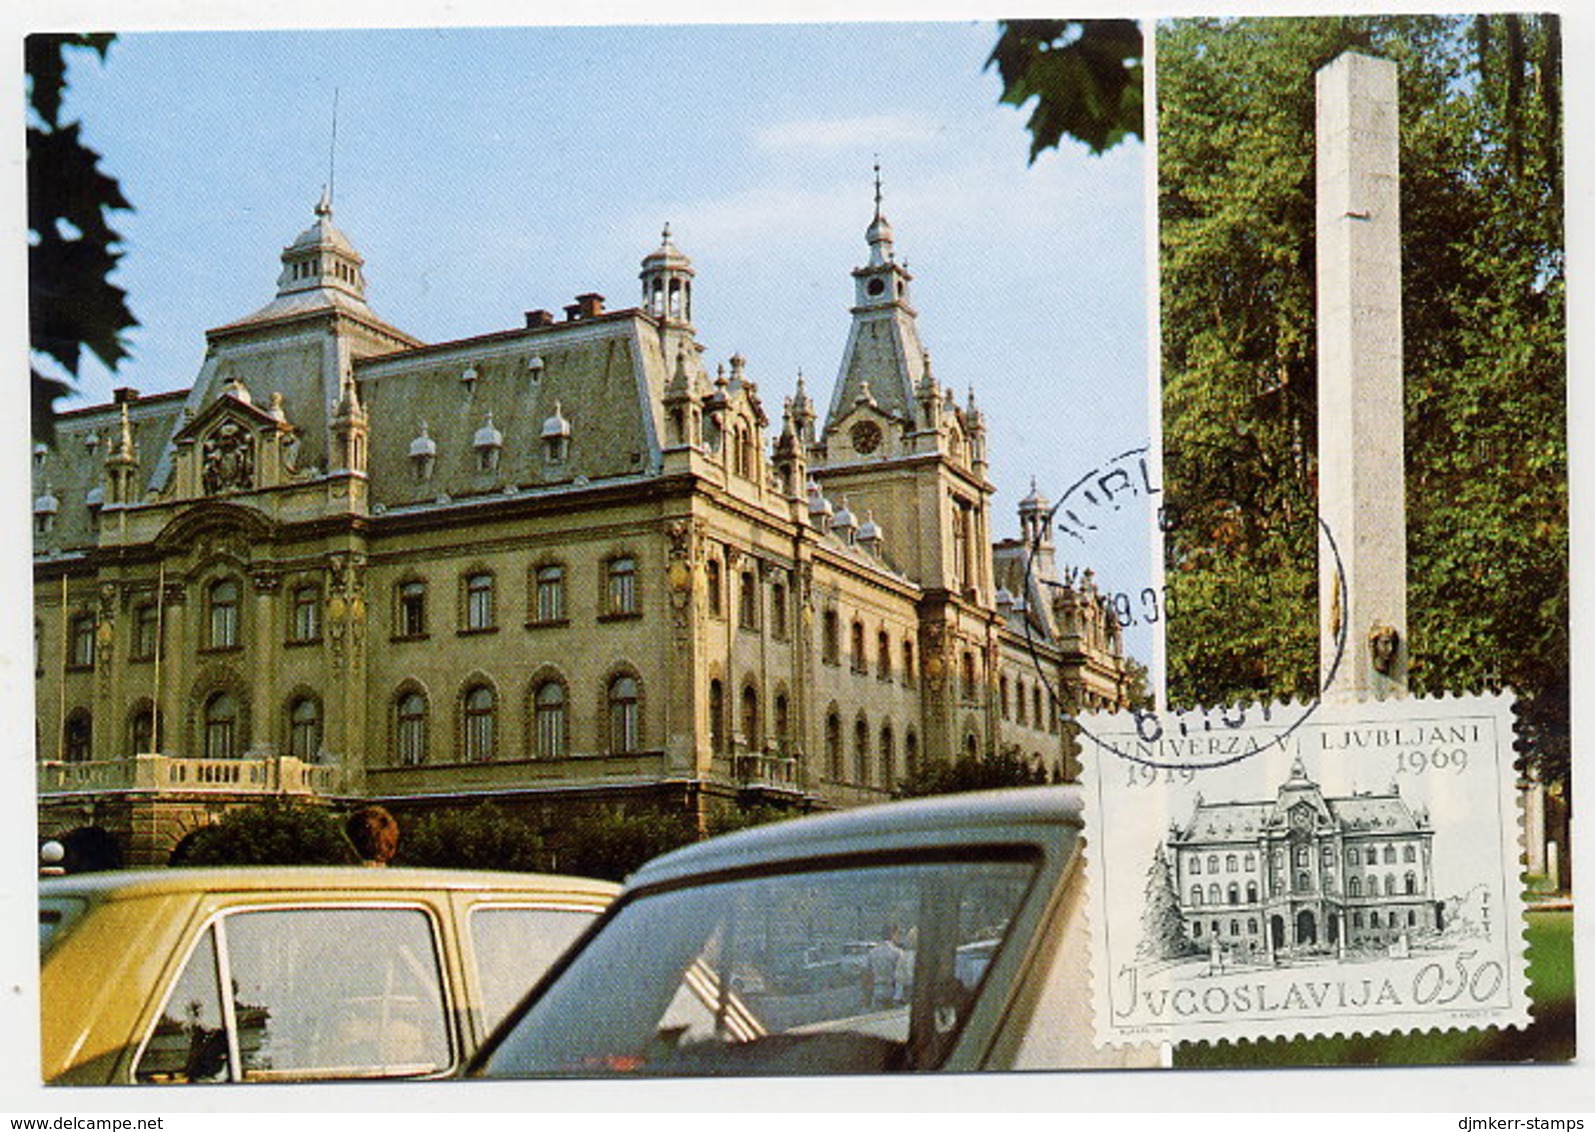 YUGOSLAVIA 1969 Ljubljana University On Maximum Card. Michel 1358 - Maximumkaarten